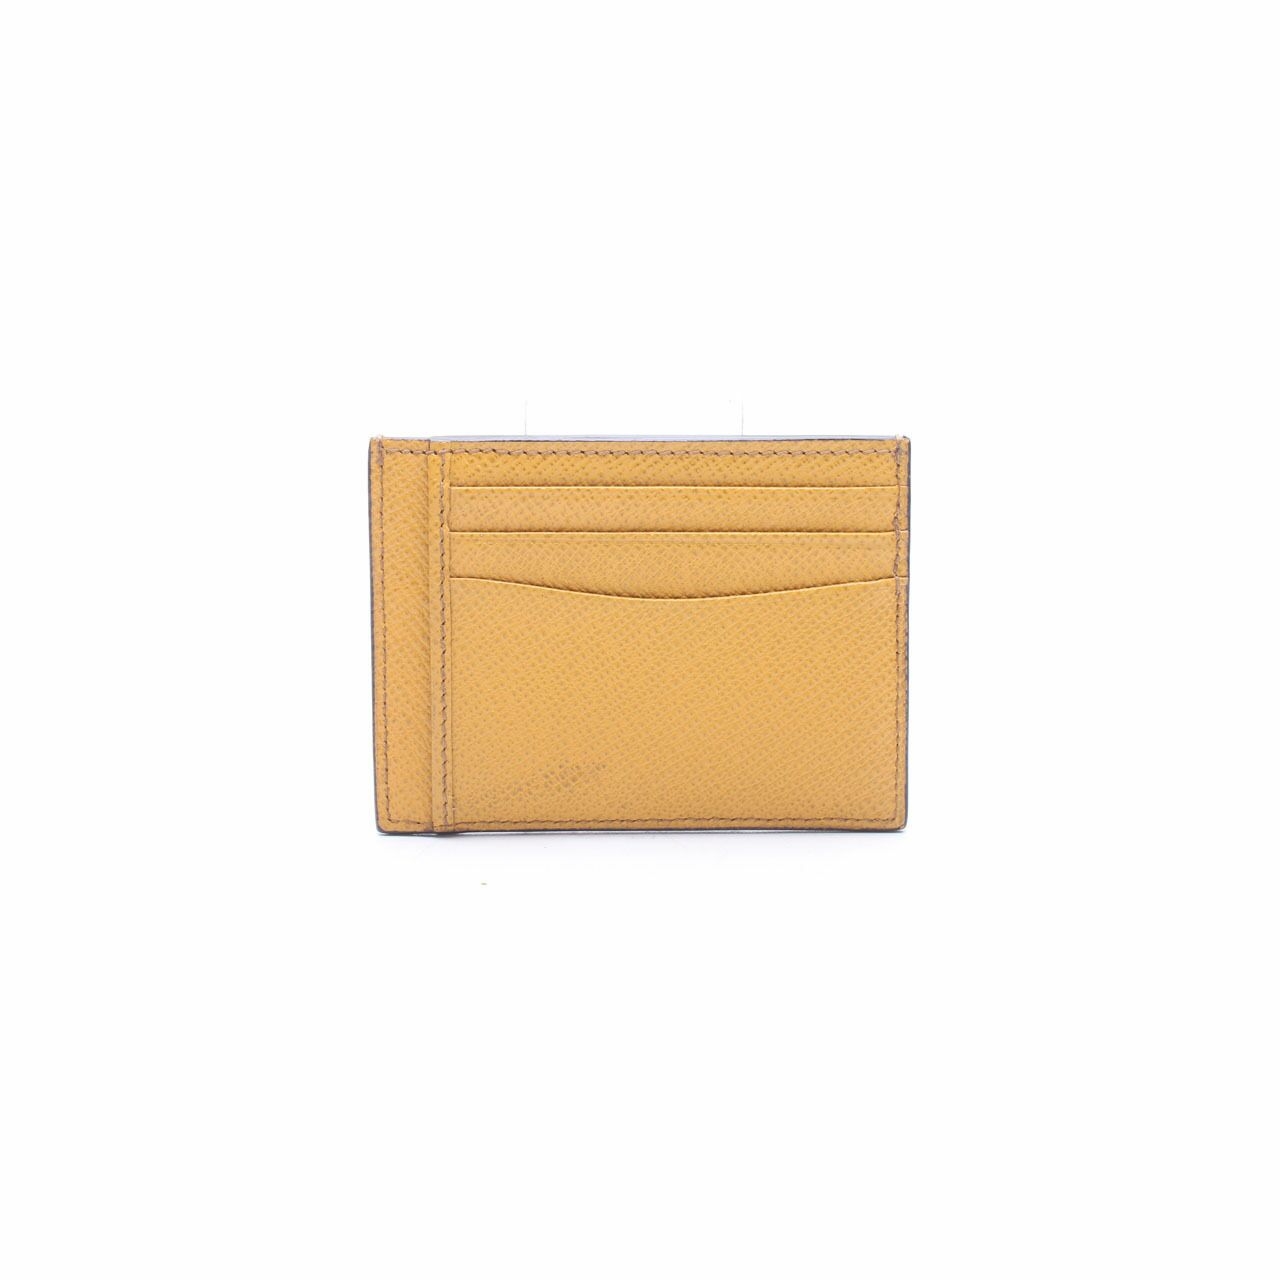 Boss Hugo Boss Signature Mustard Small Leather Card Wallet